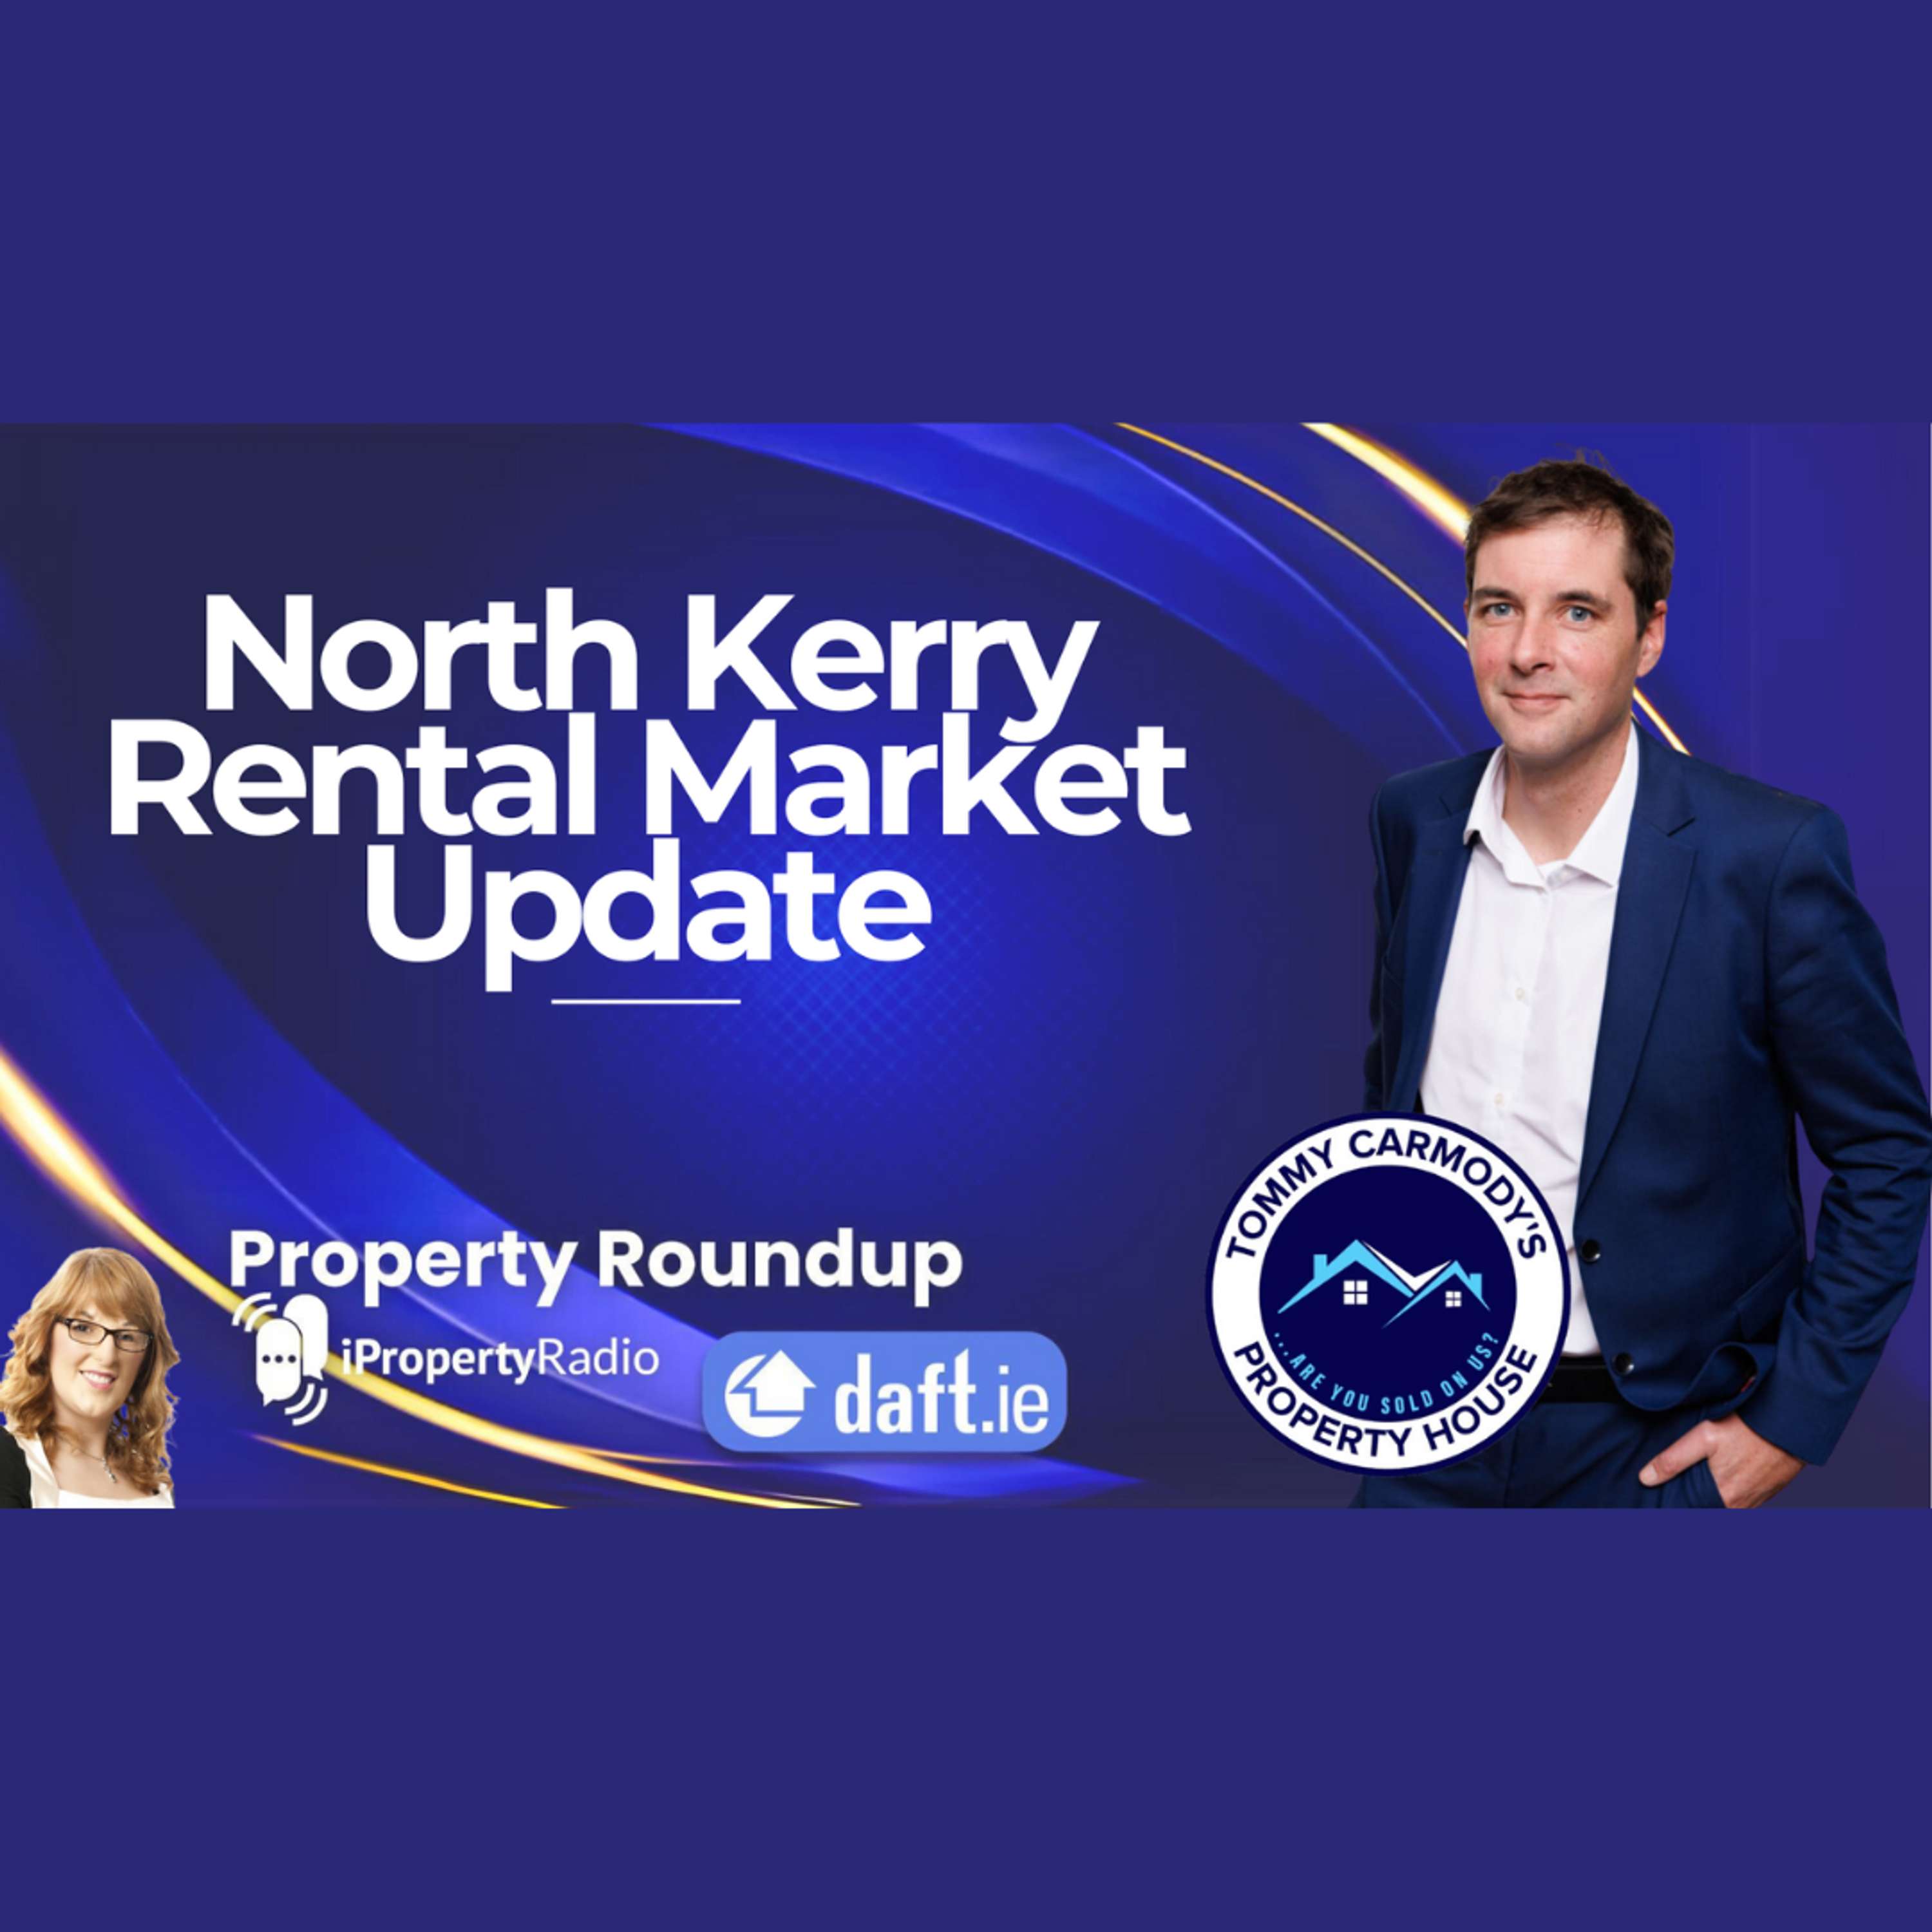 North Kerry Rental Market Update